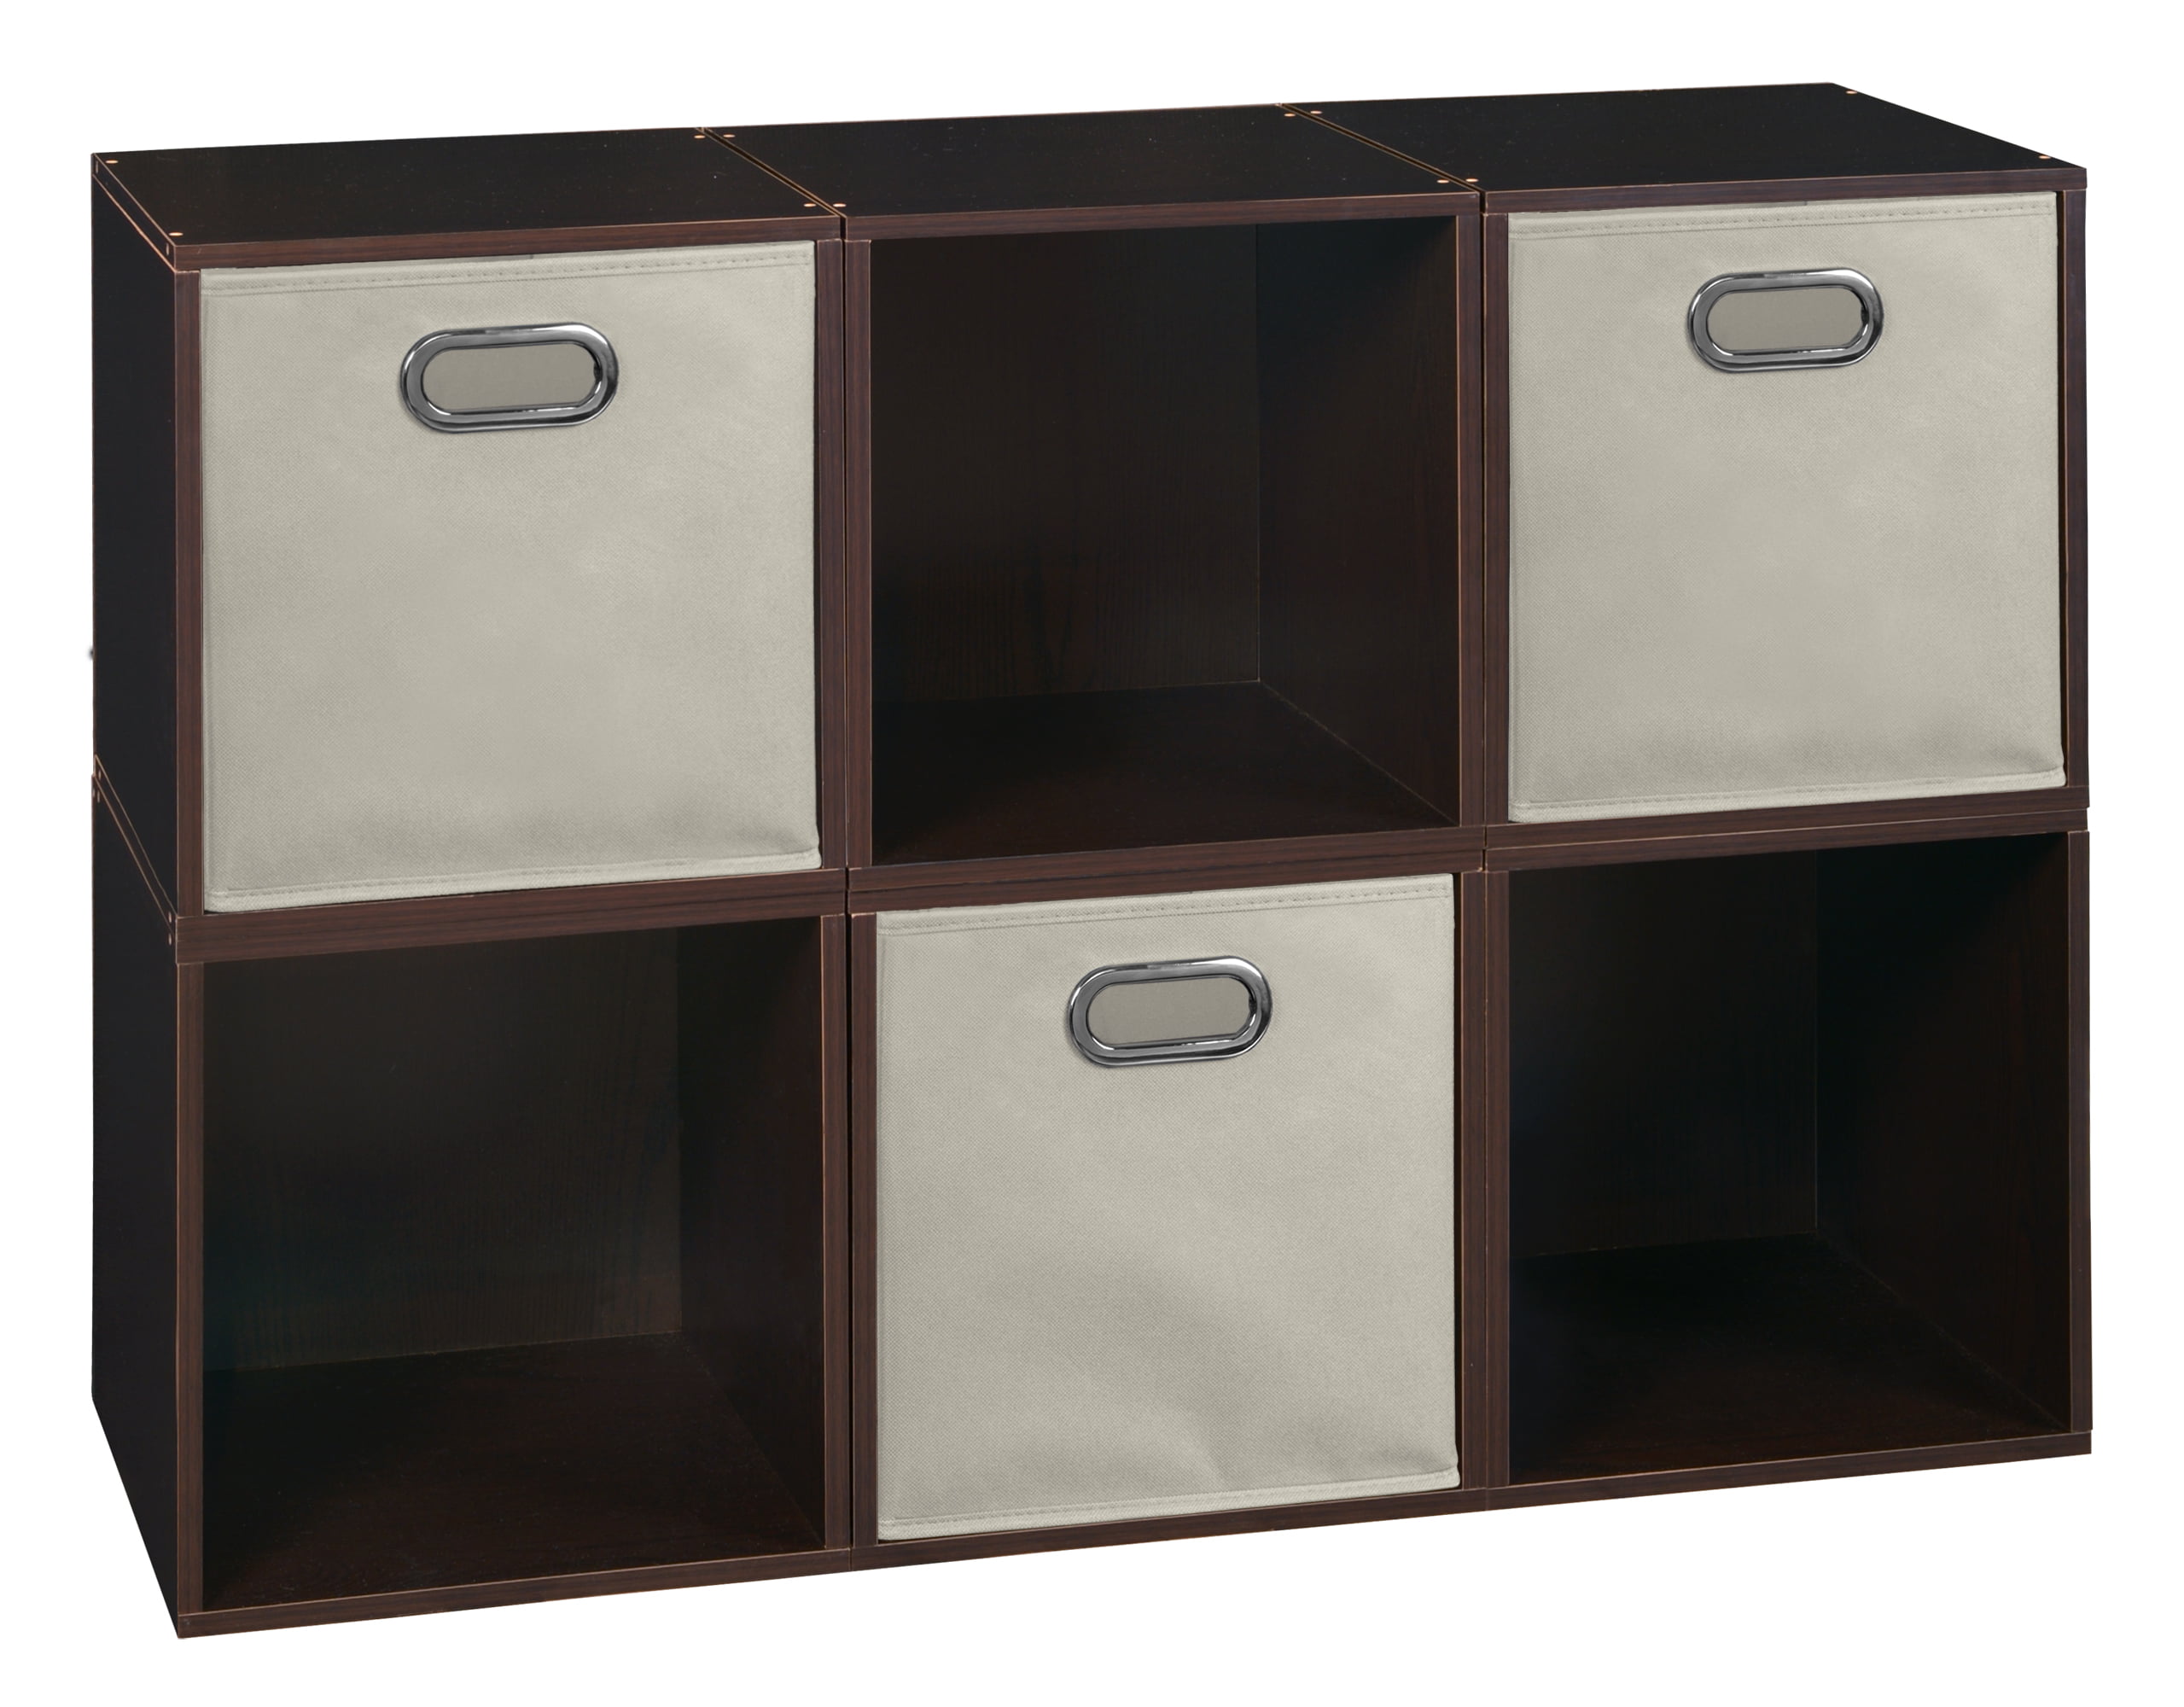 3 Cubes and 1 Canvas Bin Truffle/Black Details about   Niche Cubo Storage Set 